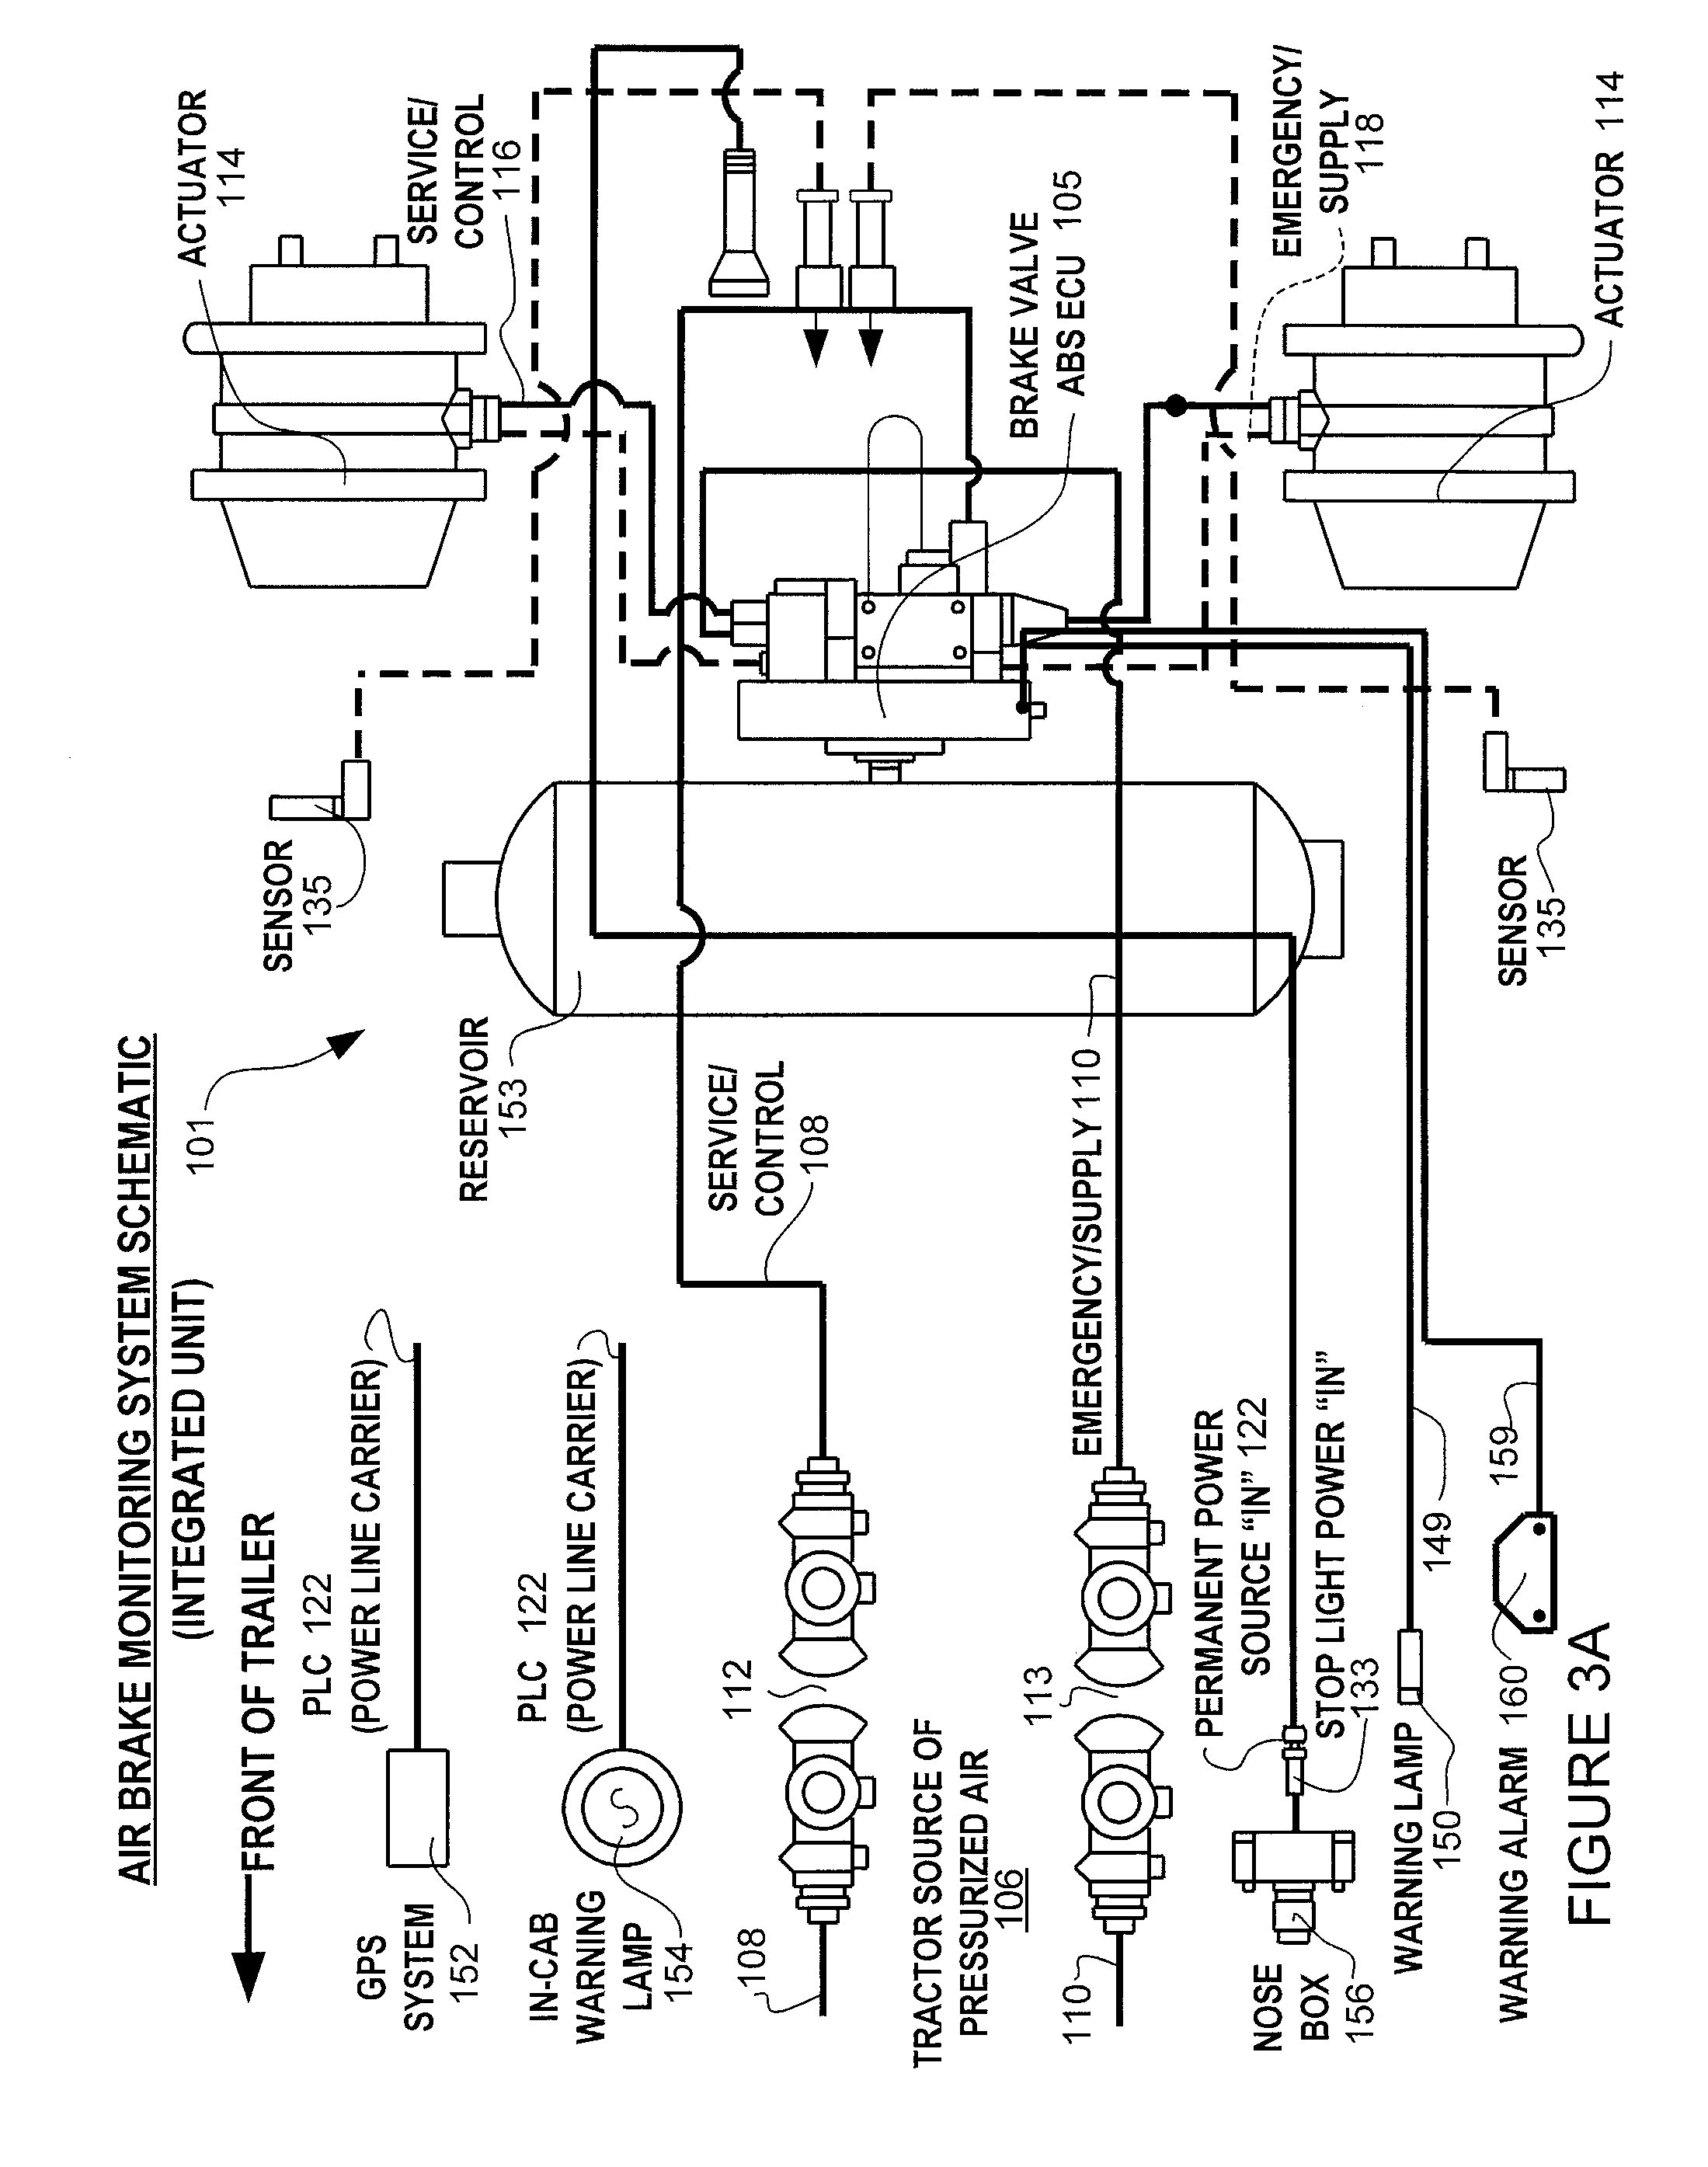 Abs System Diagrm Diagram] 99 Ranger Abs Wiring Diagram Full Version Hd